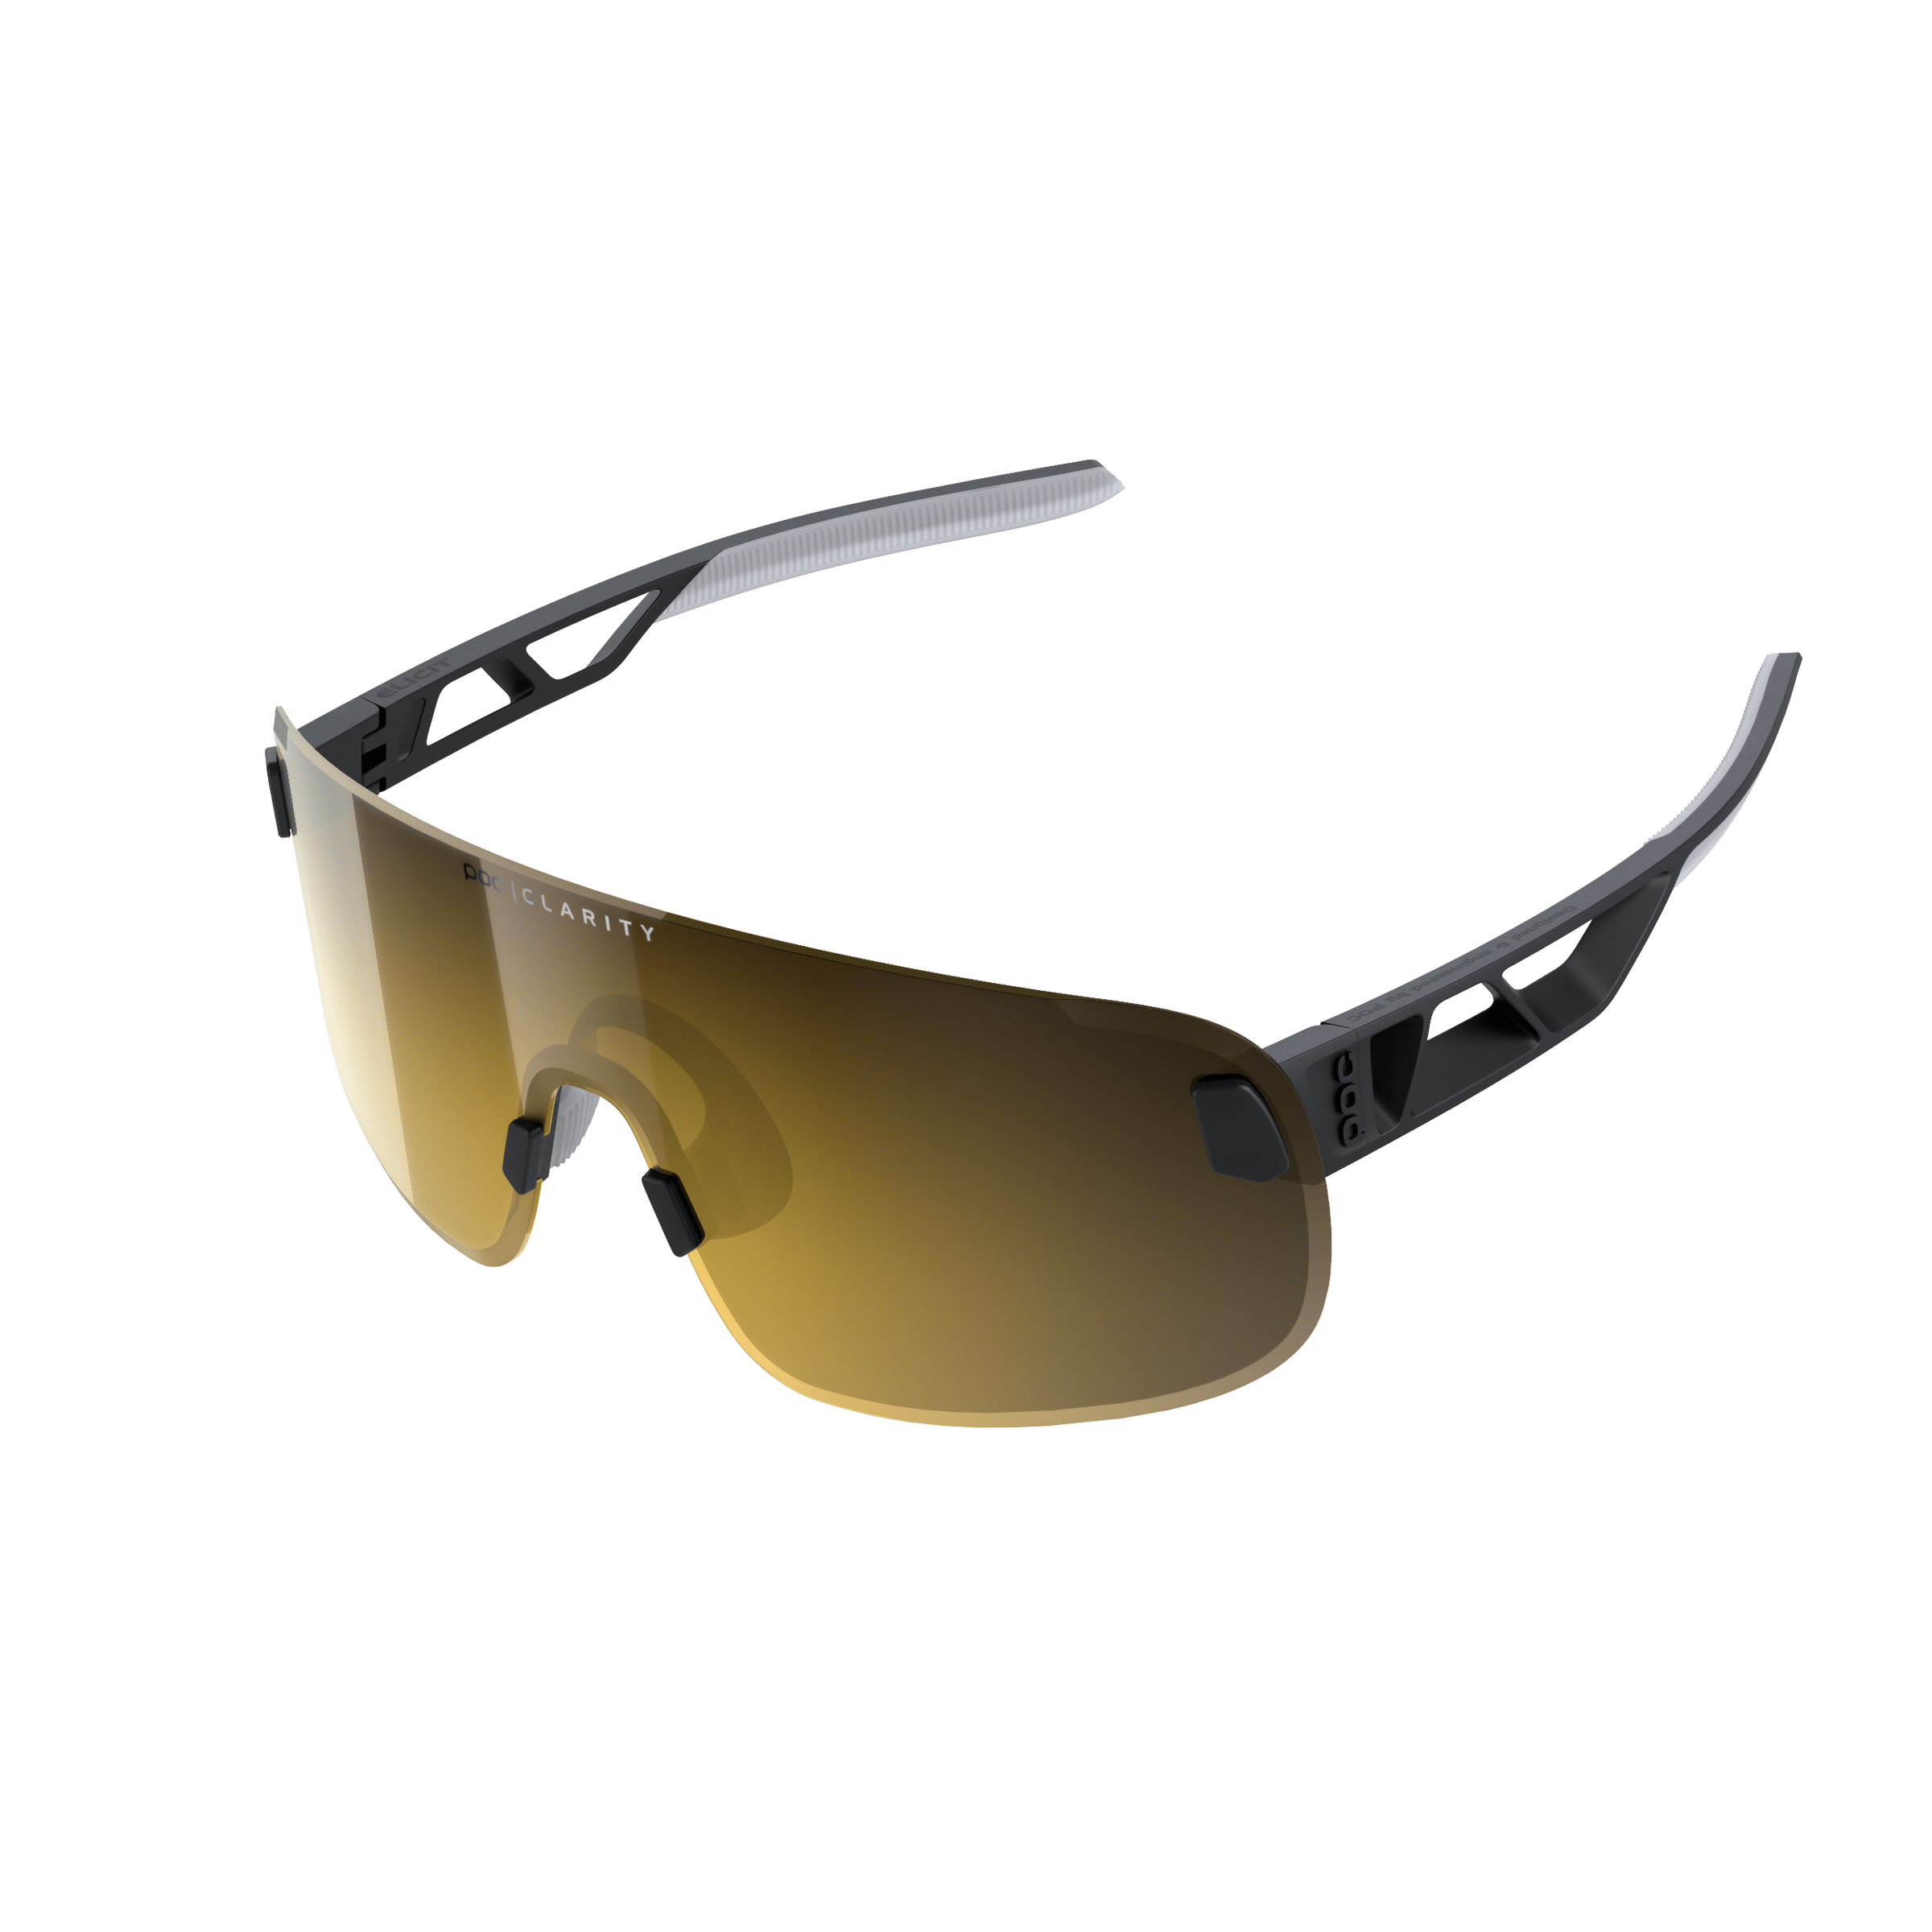 POC Elicit Sunglasses Uranium Black Clarity Road/Partly Sunny Gold Apparel - Apparel Accessories - Sunglasses